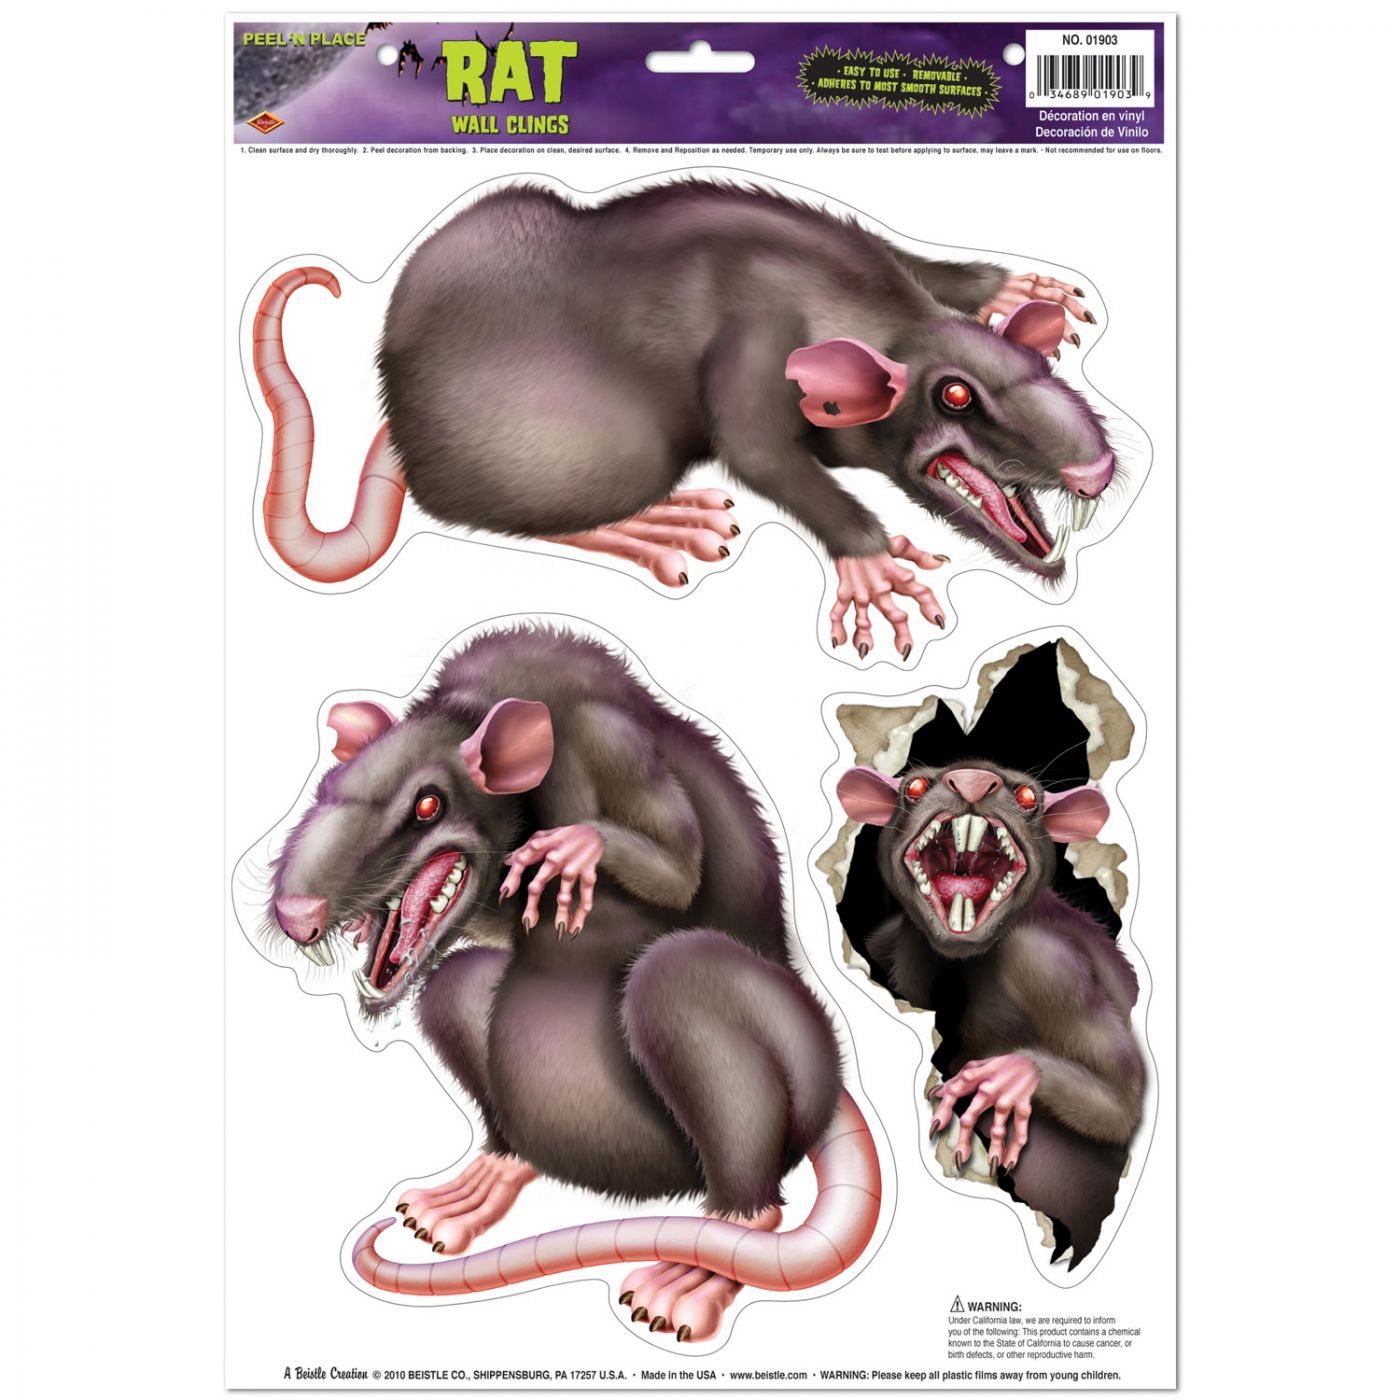 Rats Peel 'N Place image